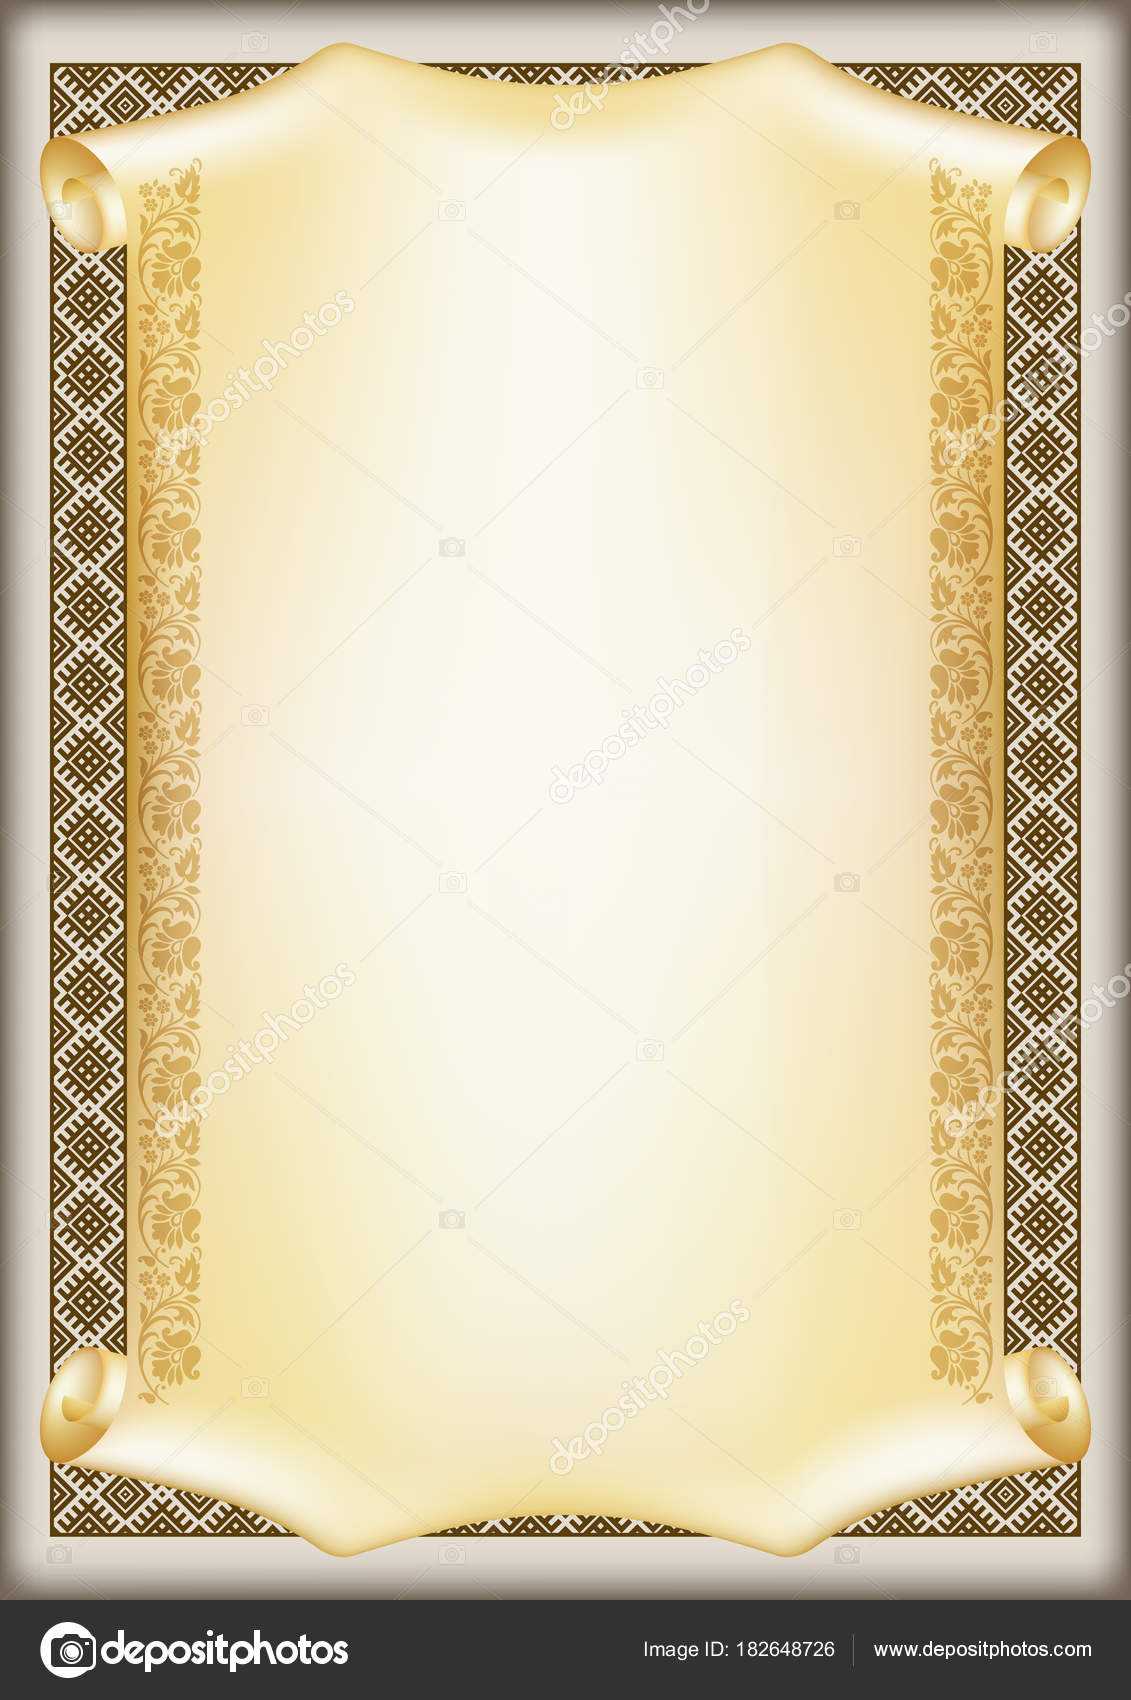 Decorative Rectangular Framework Ethnic Slavic Ornament With Certificate Scroll Template